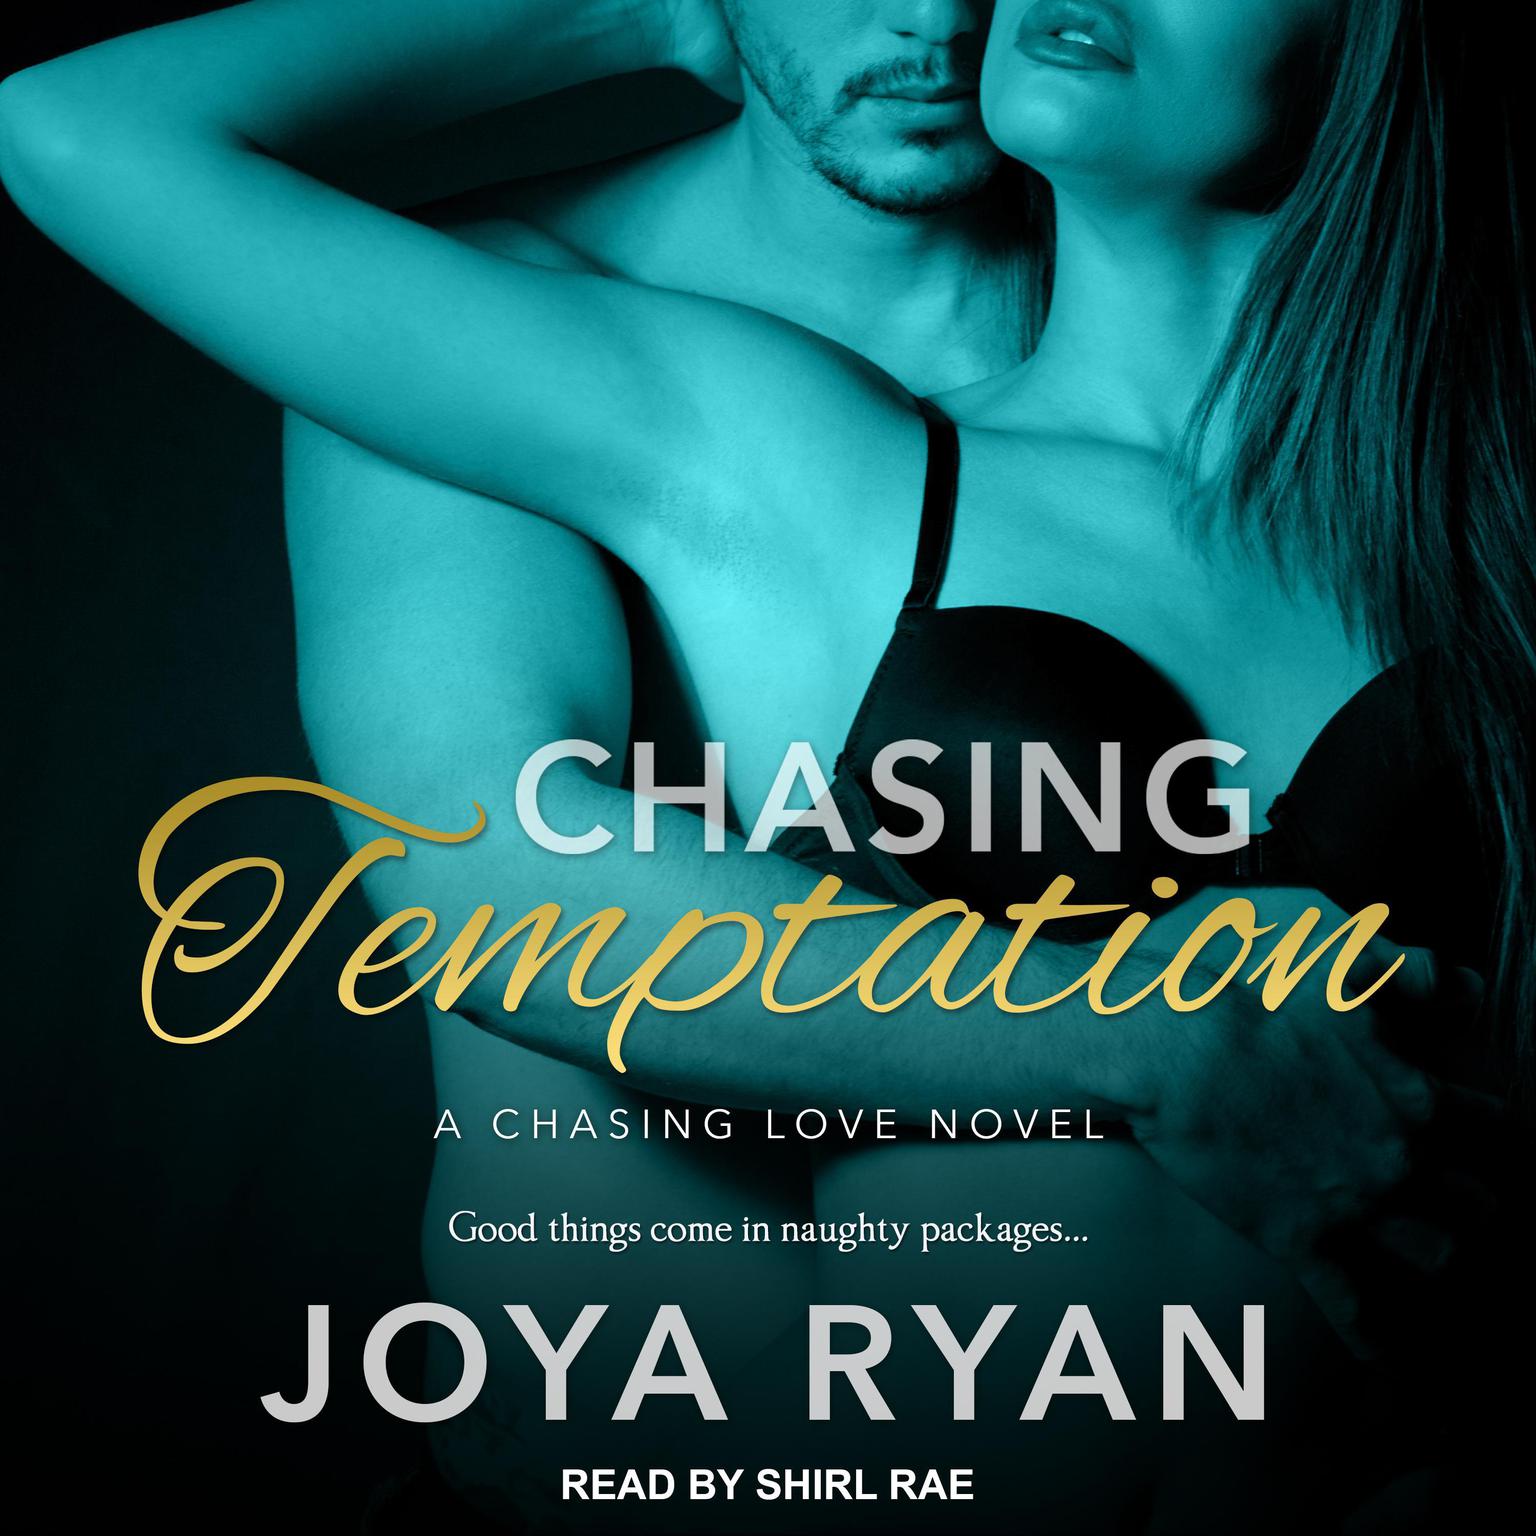 Chasing Temptation Audiobook, by Joya Ryan